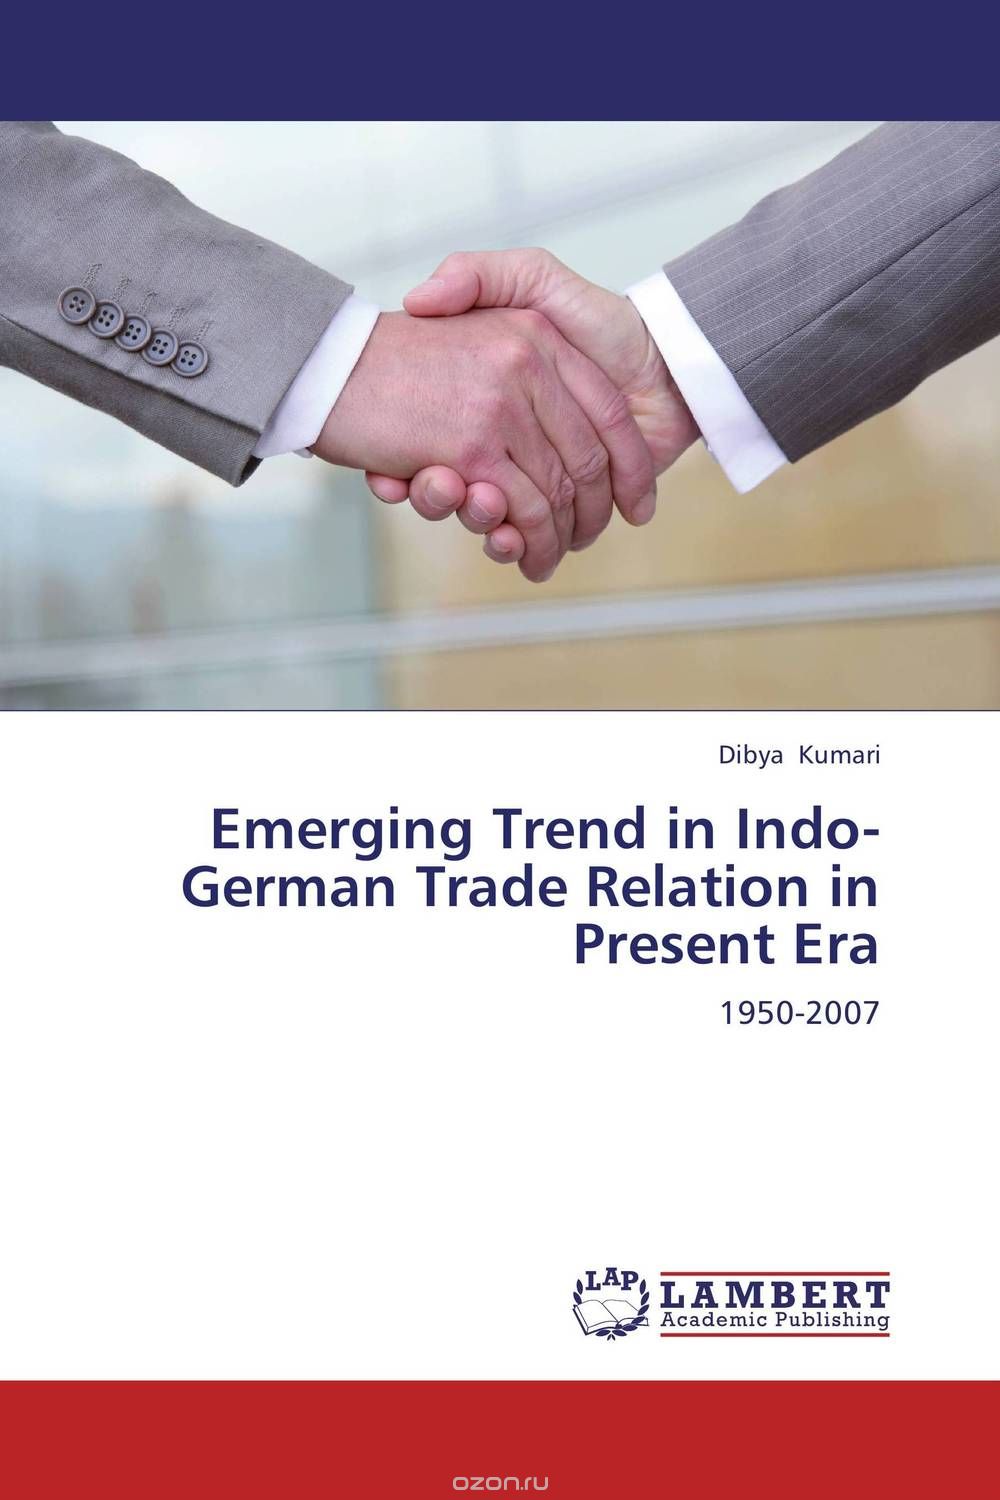 Скачать книгу "Emerging Trend in Indo-German Trade Relation in Present Era"